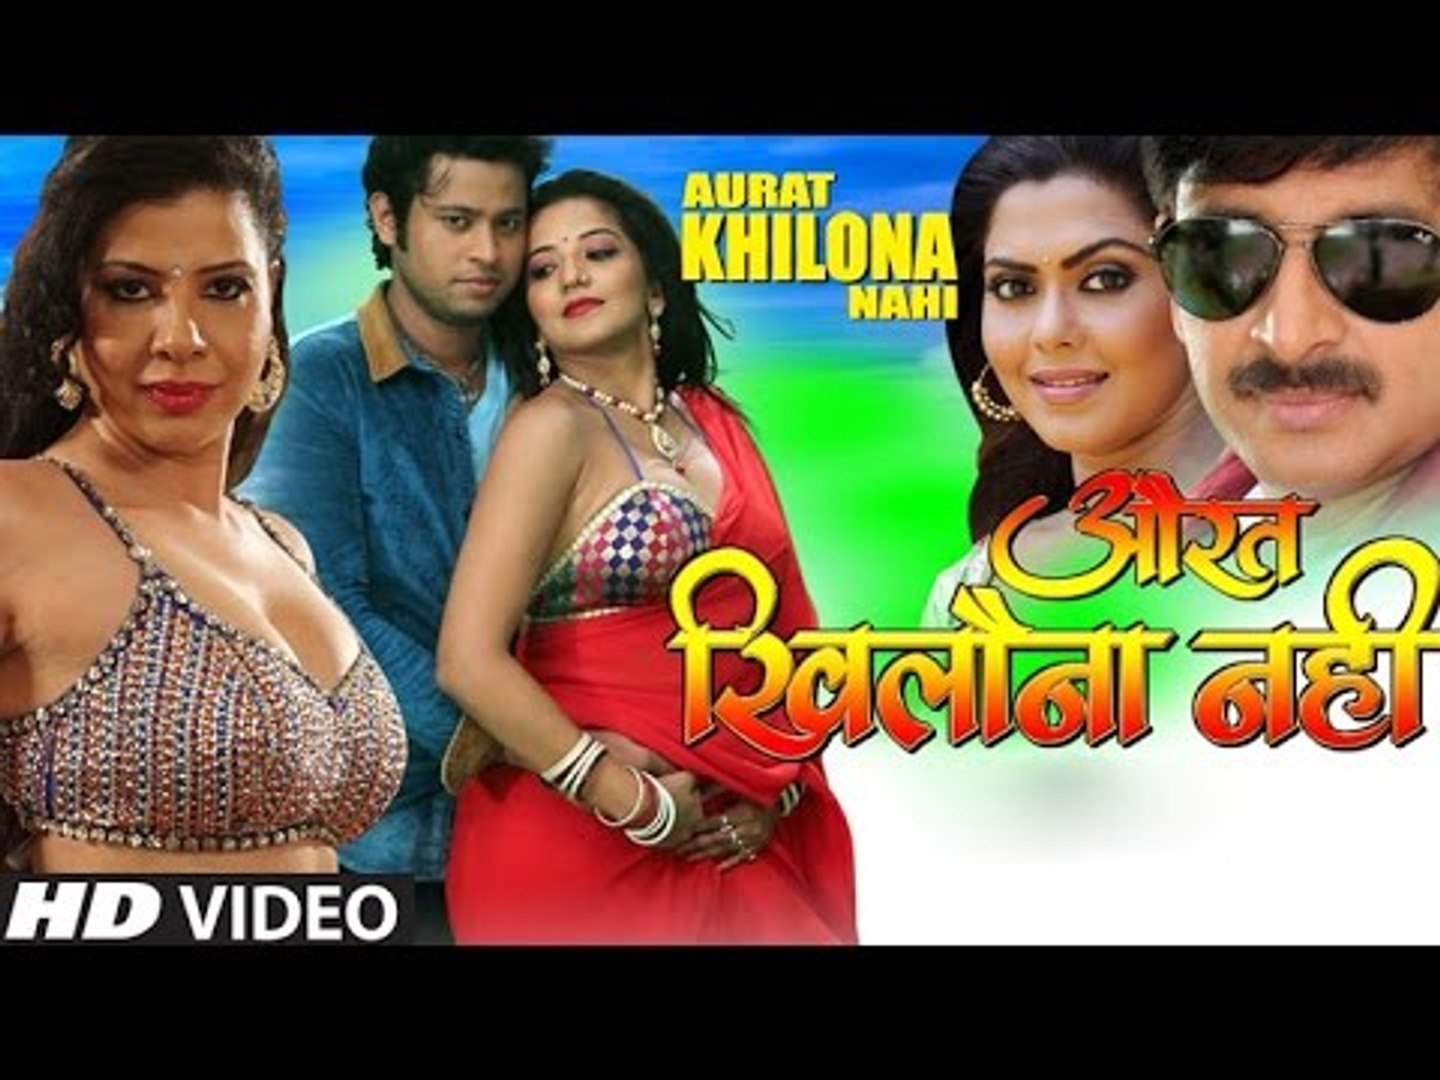 Aurat khilona nahi bhojpuri movie download